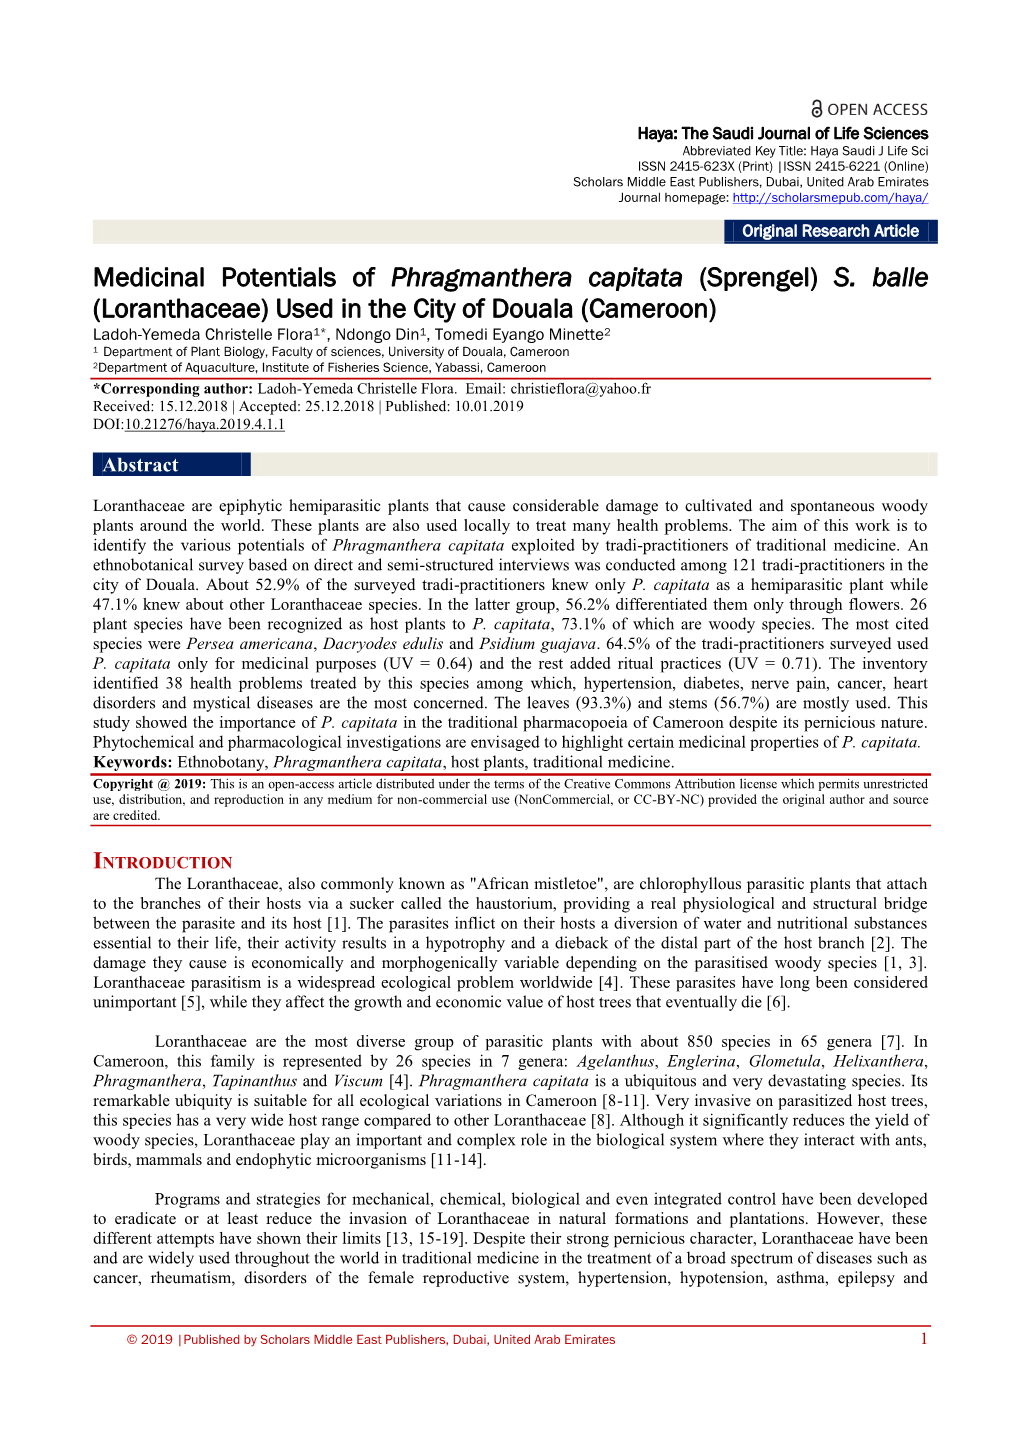 Medicinal Potentials of Phragmanthera Capitata (Sprengel) S